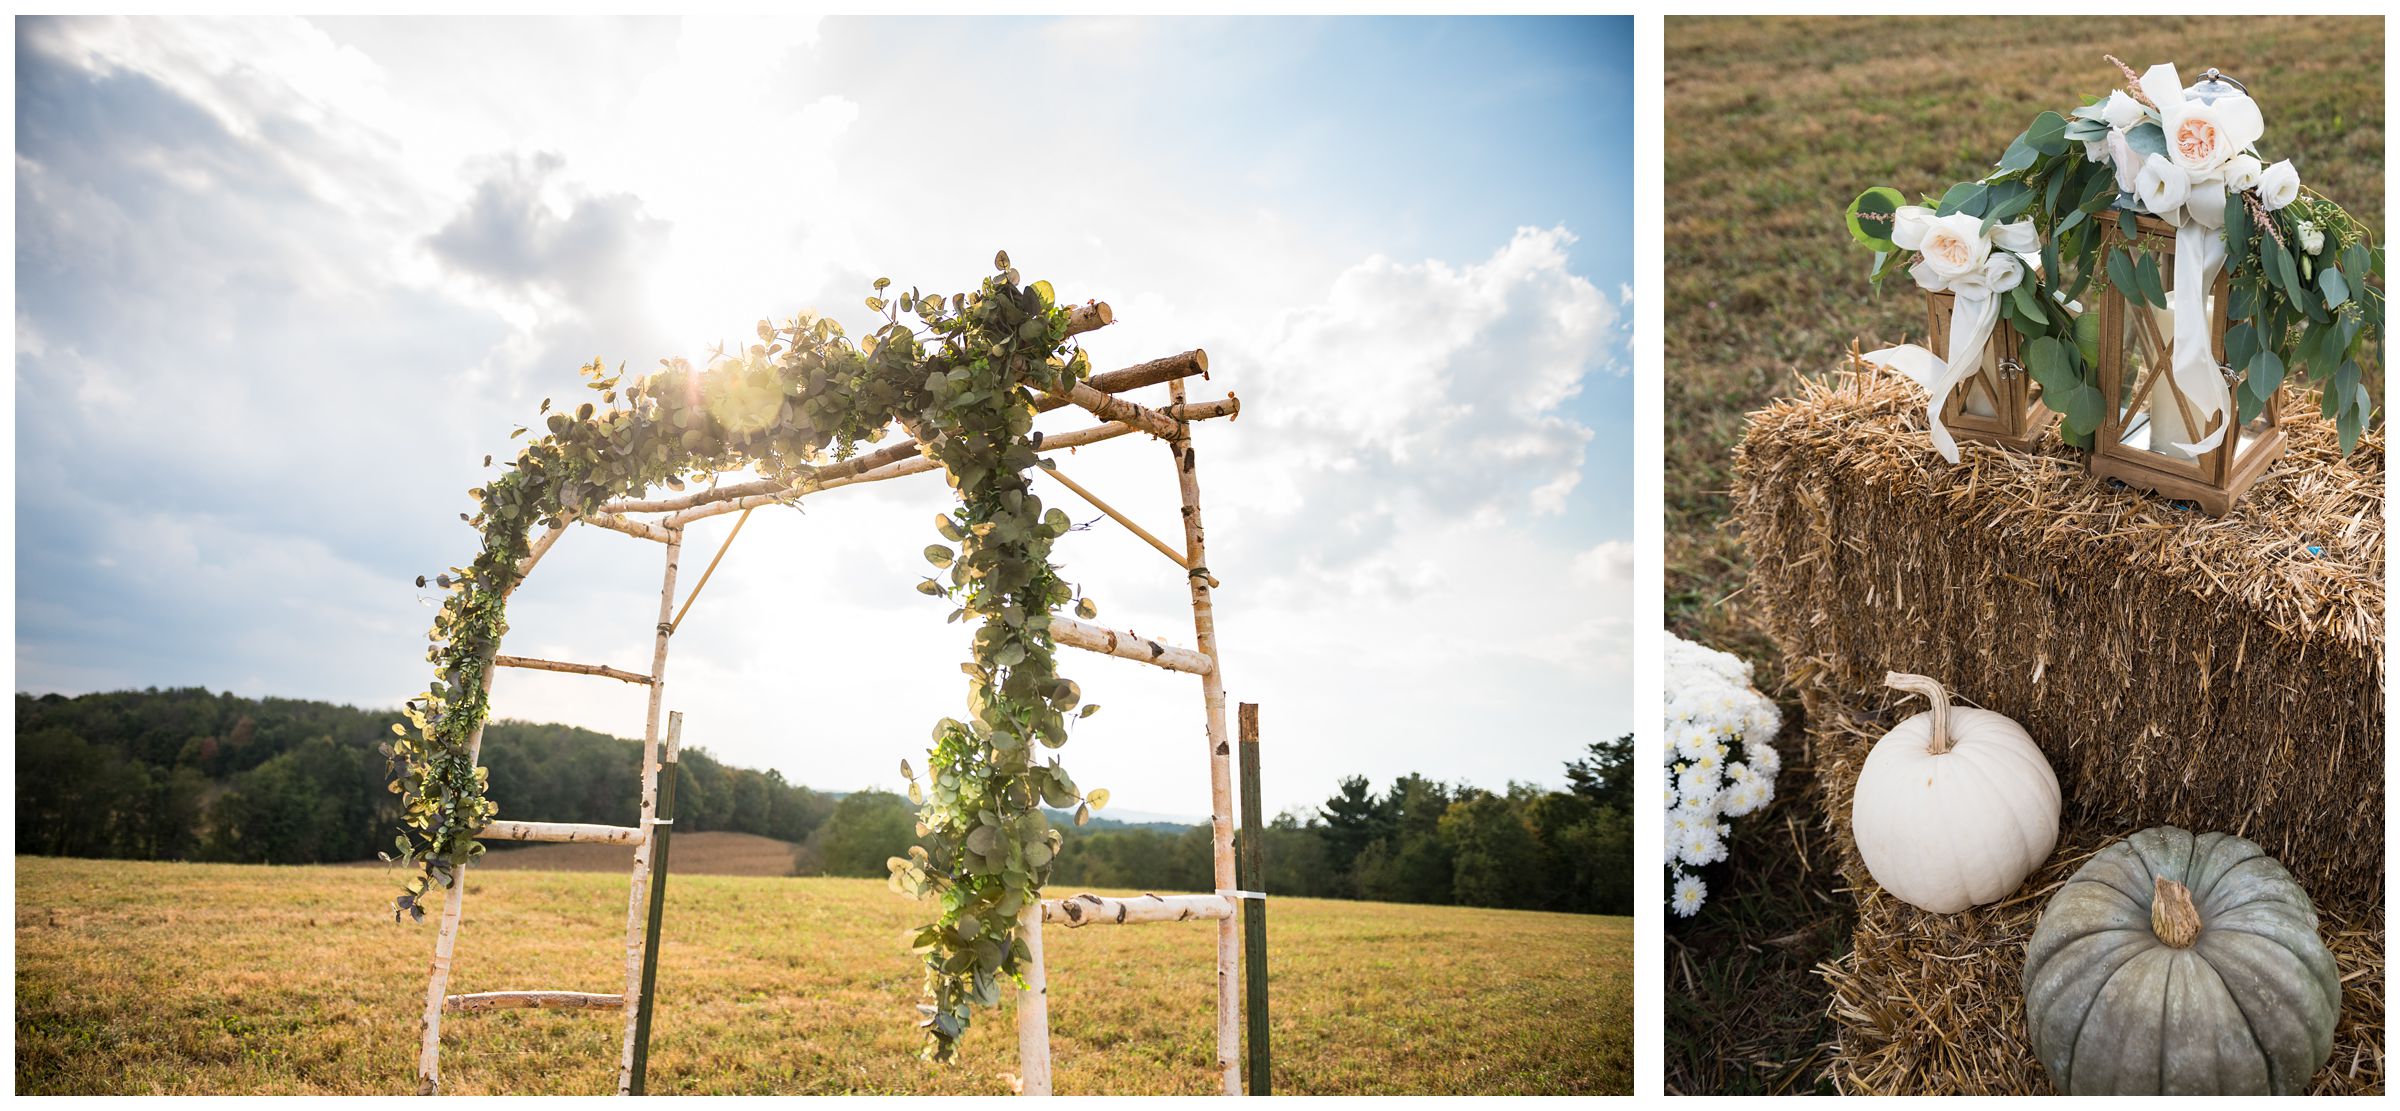 Rustic fall farm wedding decor with greenery arch, pumpkins, and lanterns.